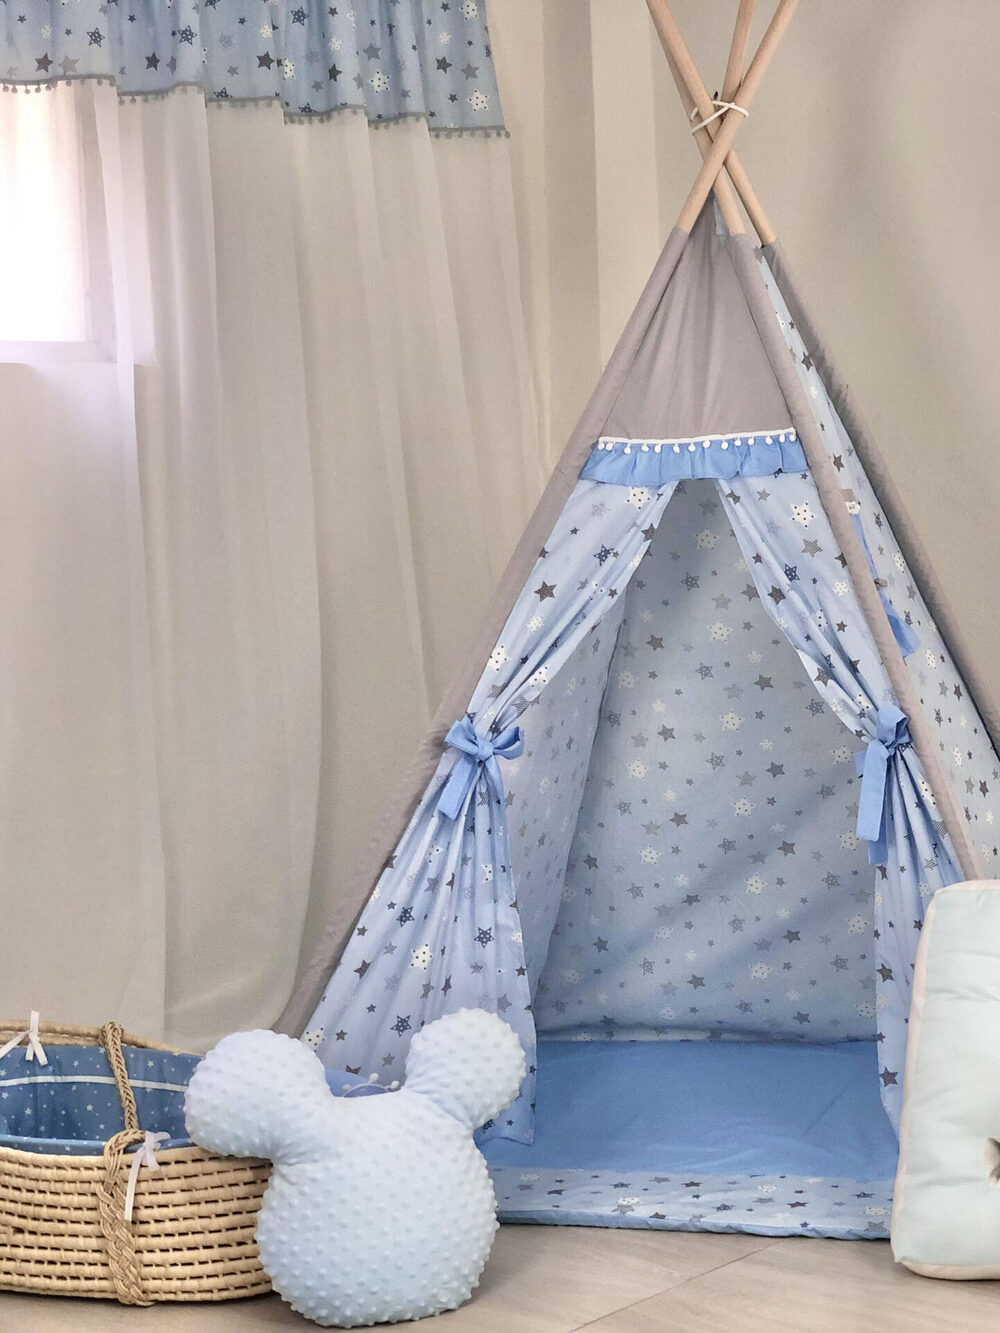 Children's Tent - Teepee Tent Blue Dream